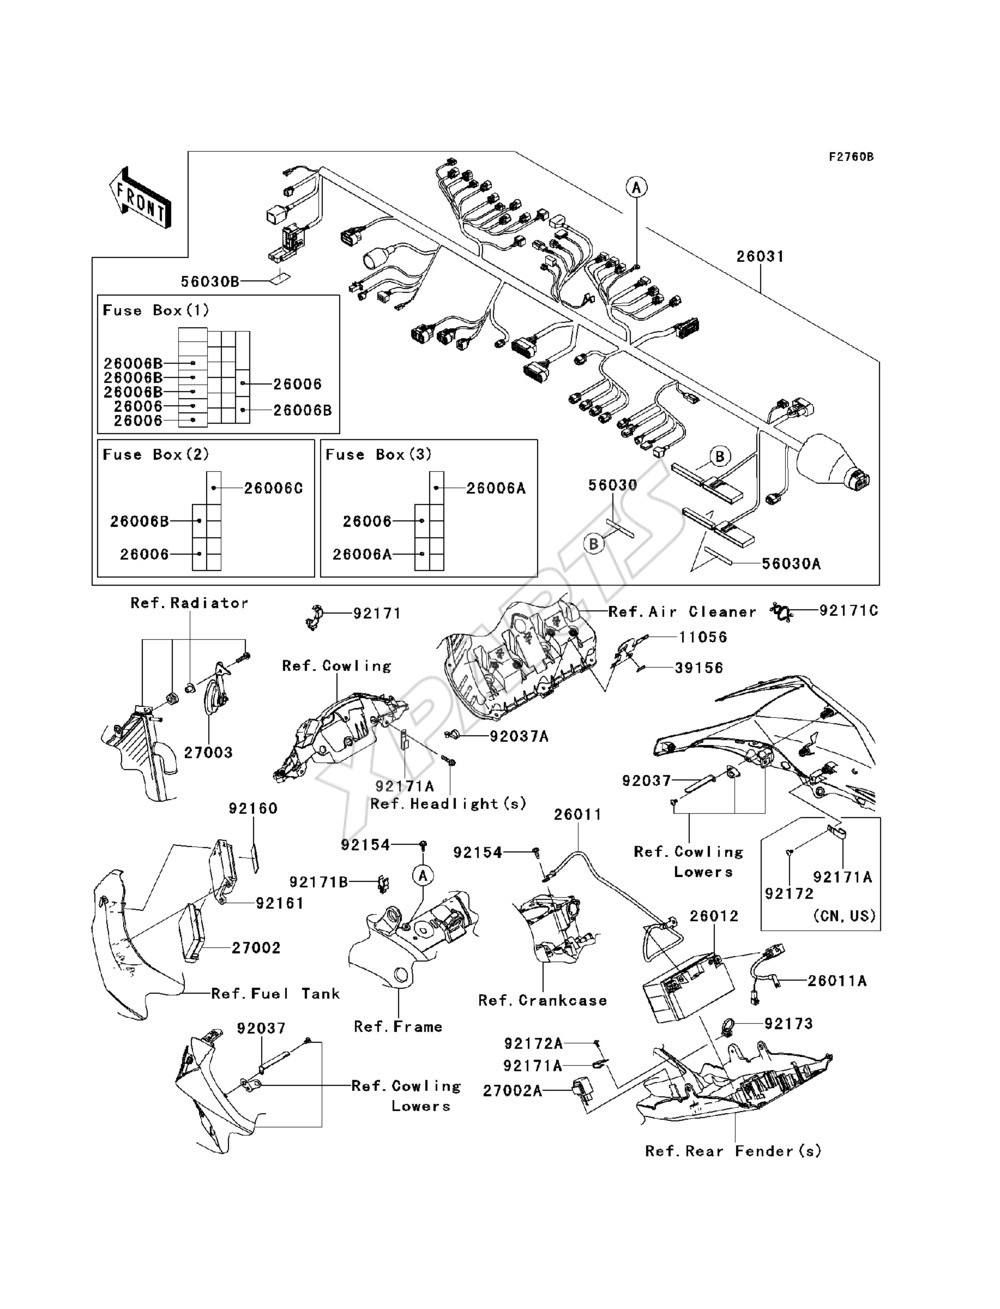 Bild für Kategorie Chassis Electrical Equipment(KDF / KEF)